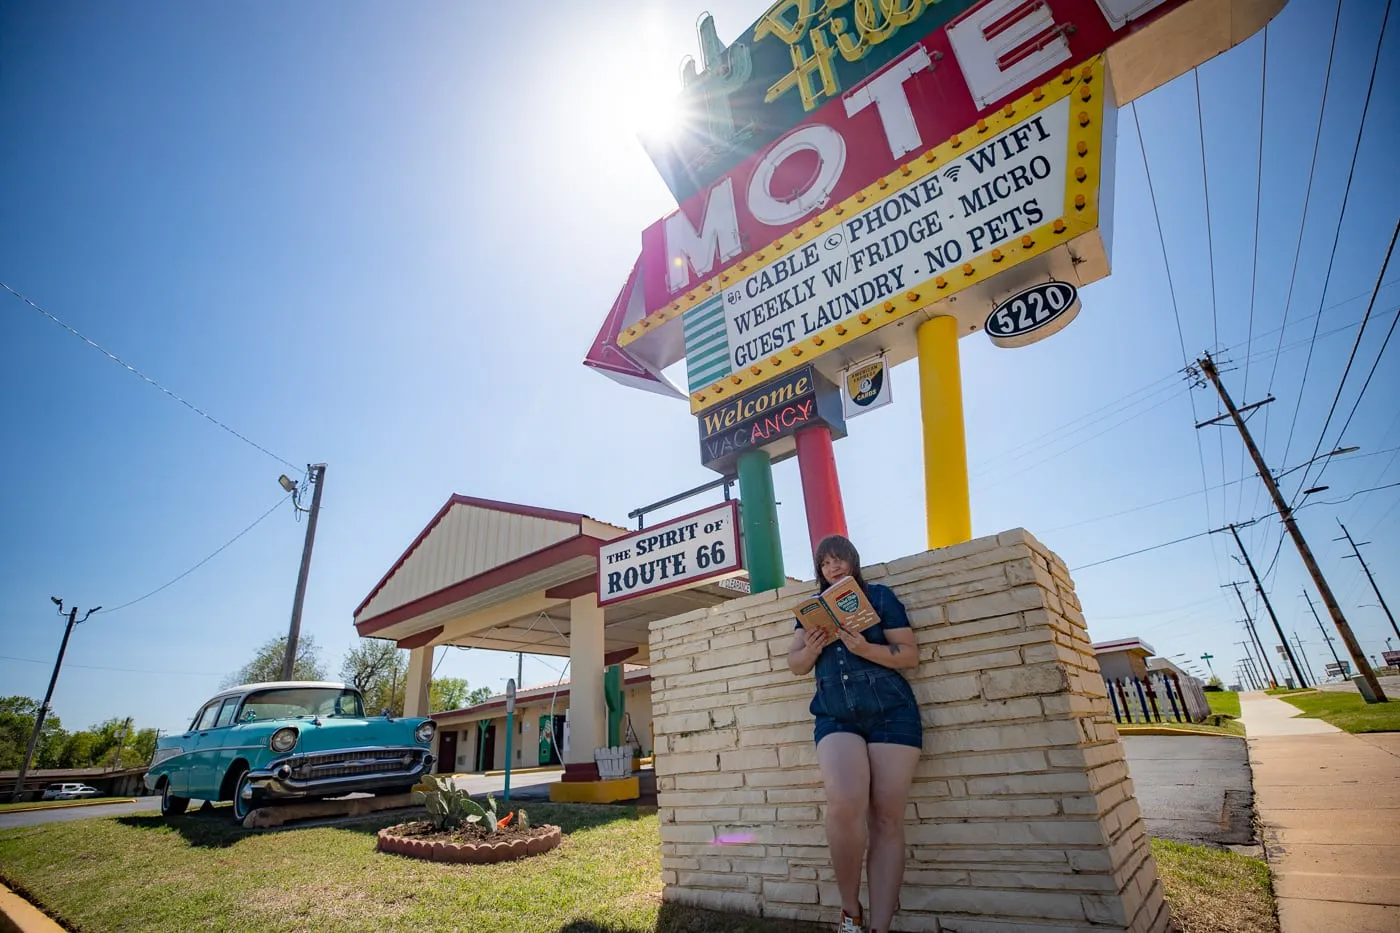 Desert Hills Motel in Tulsa, Oklahoma (Route 66 Motel)